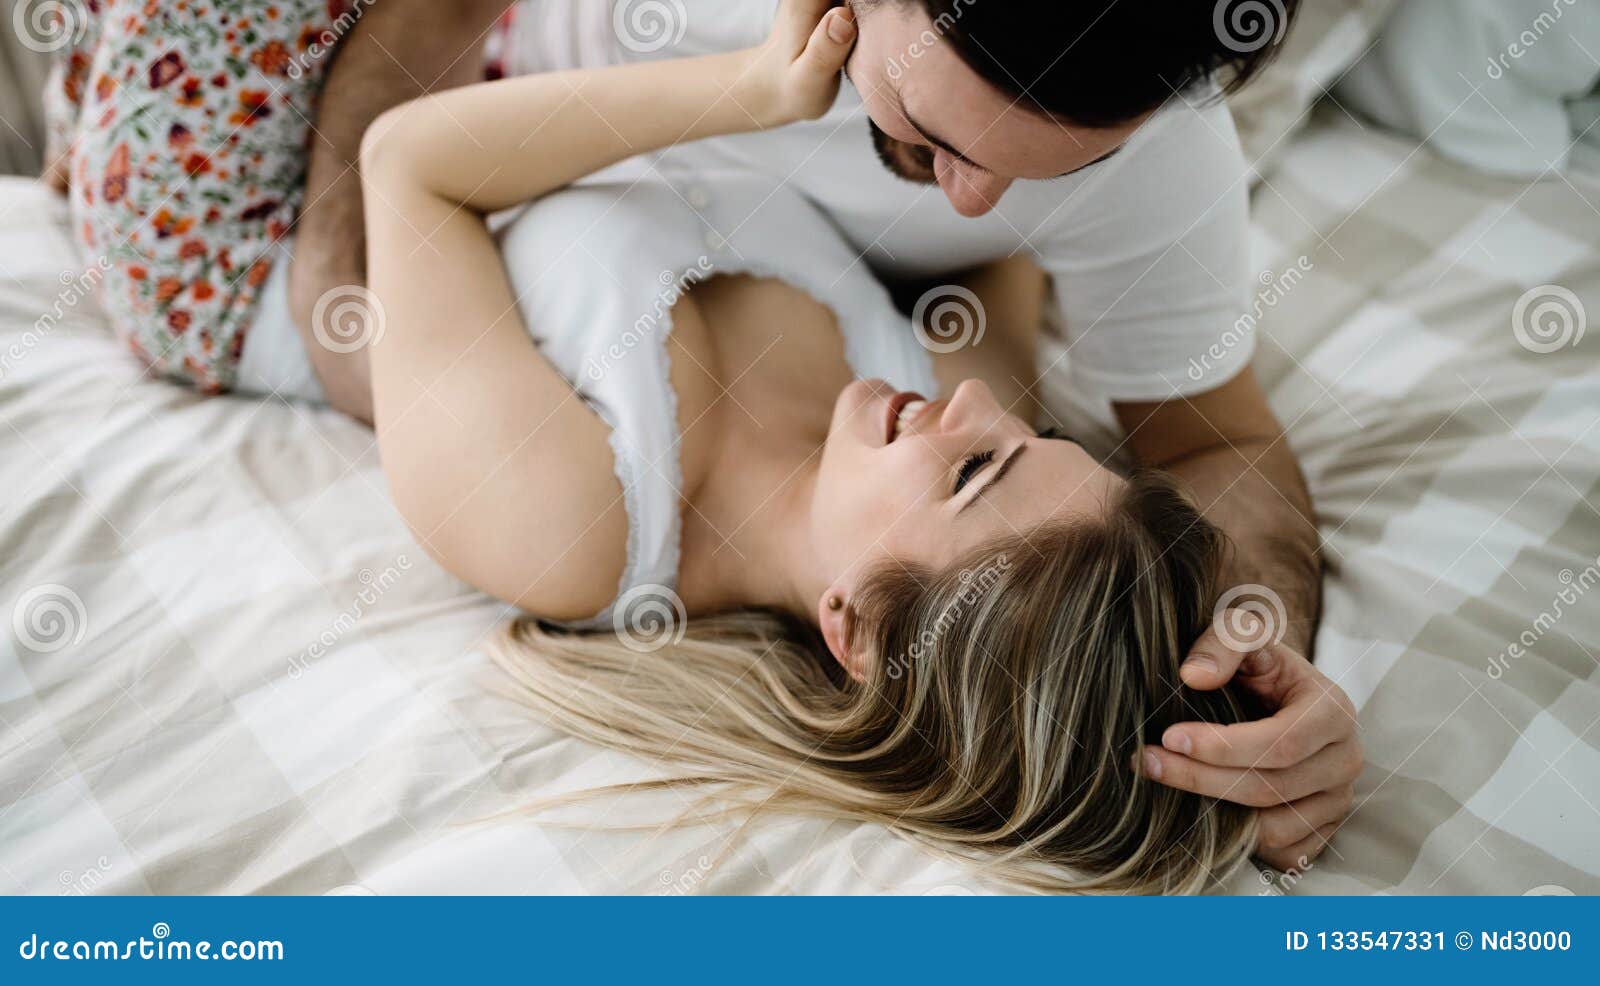 Romantic Foreplay Breast | Gay Fetish XXX